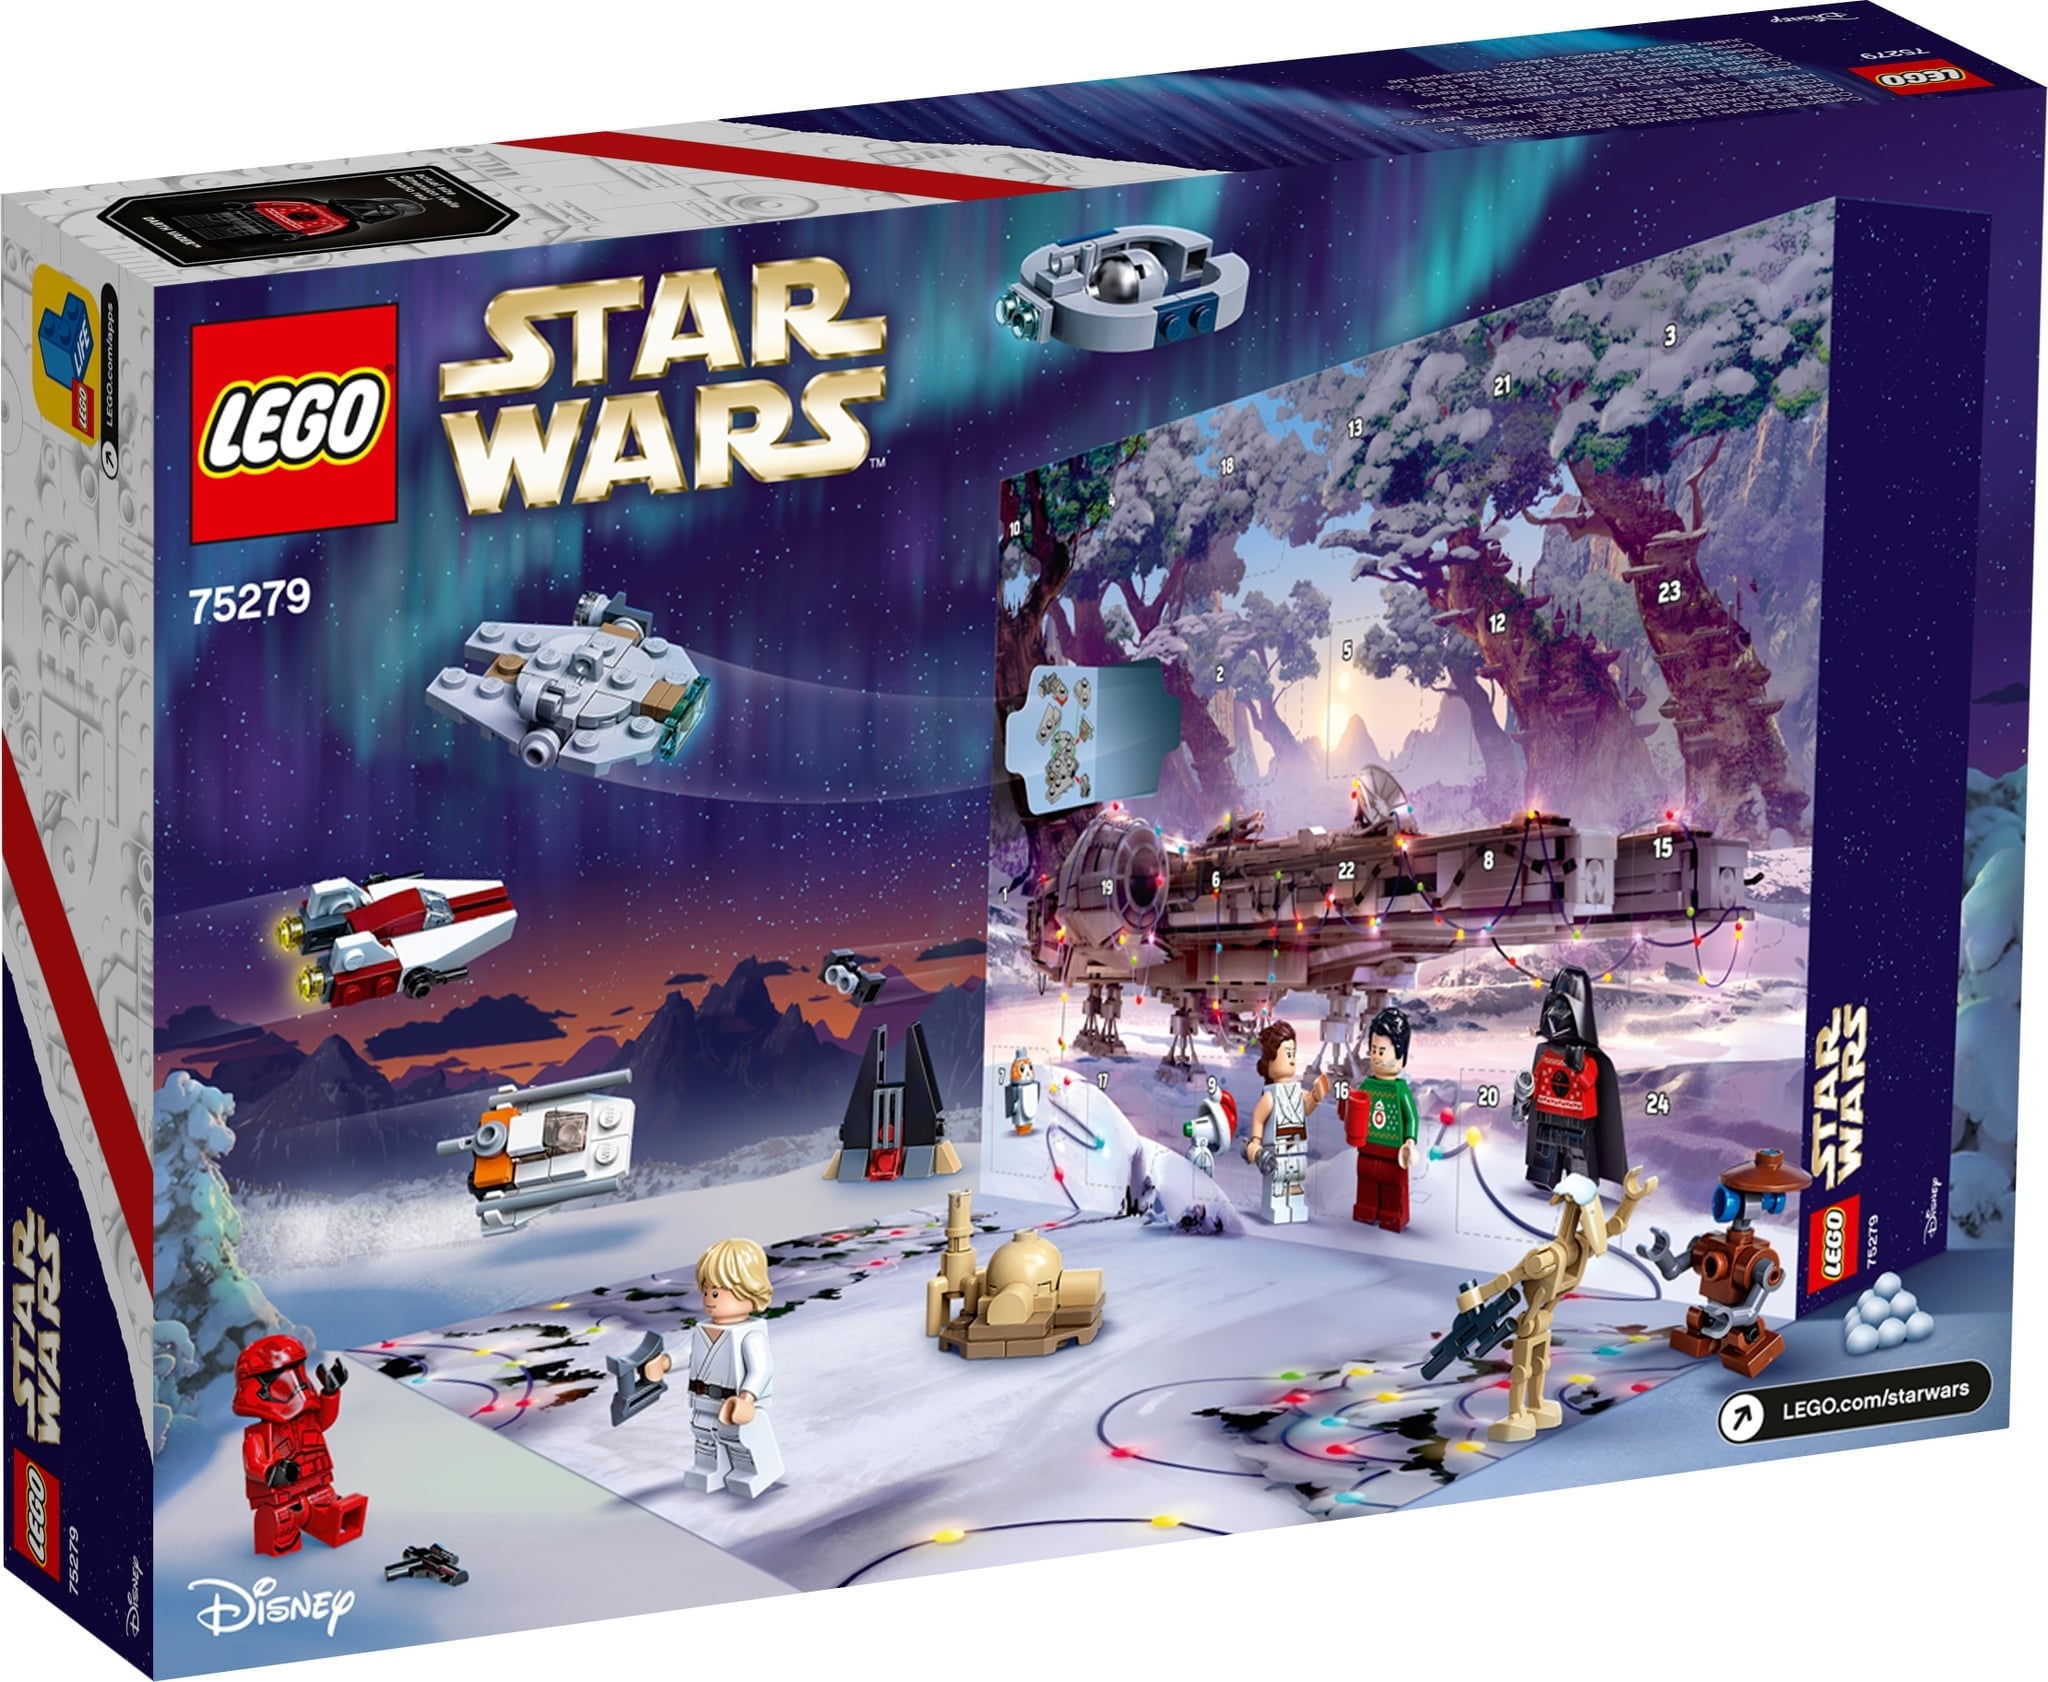 Take Lego Star Wars Advent Calendar 2021 Code | Best Calendar Example